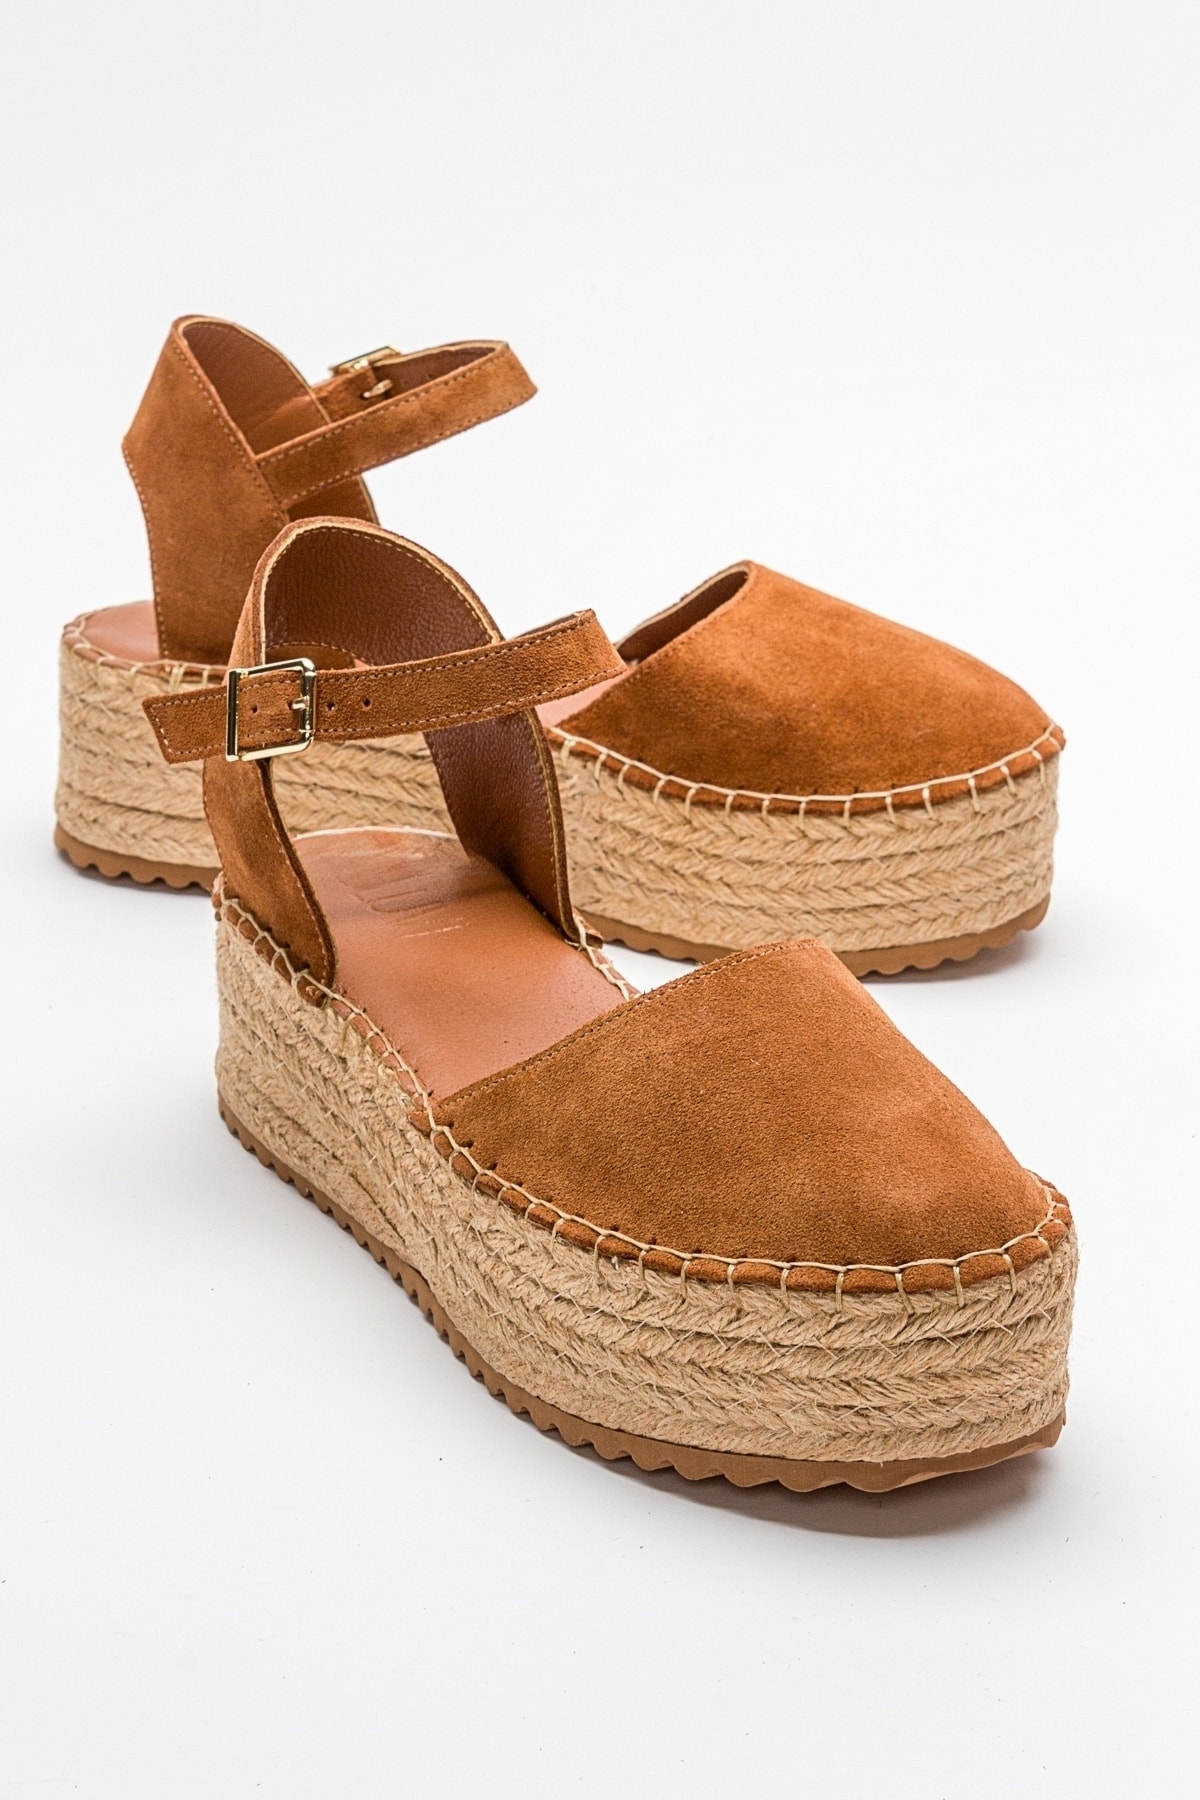 LuviShoes VIBA Camel Genuine Leather Women Sandals